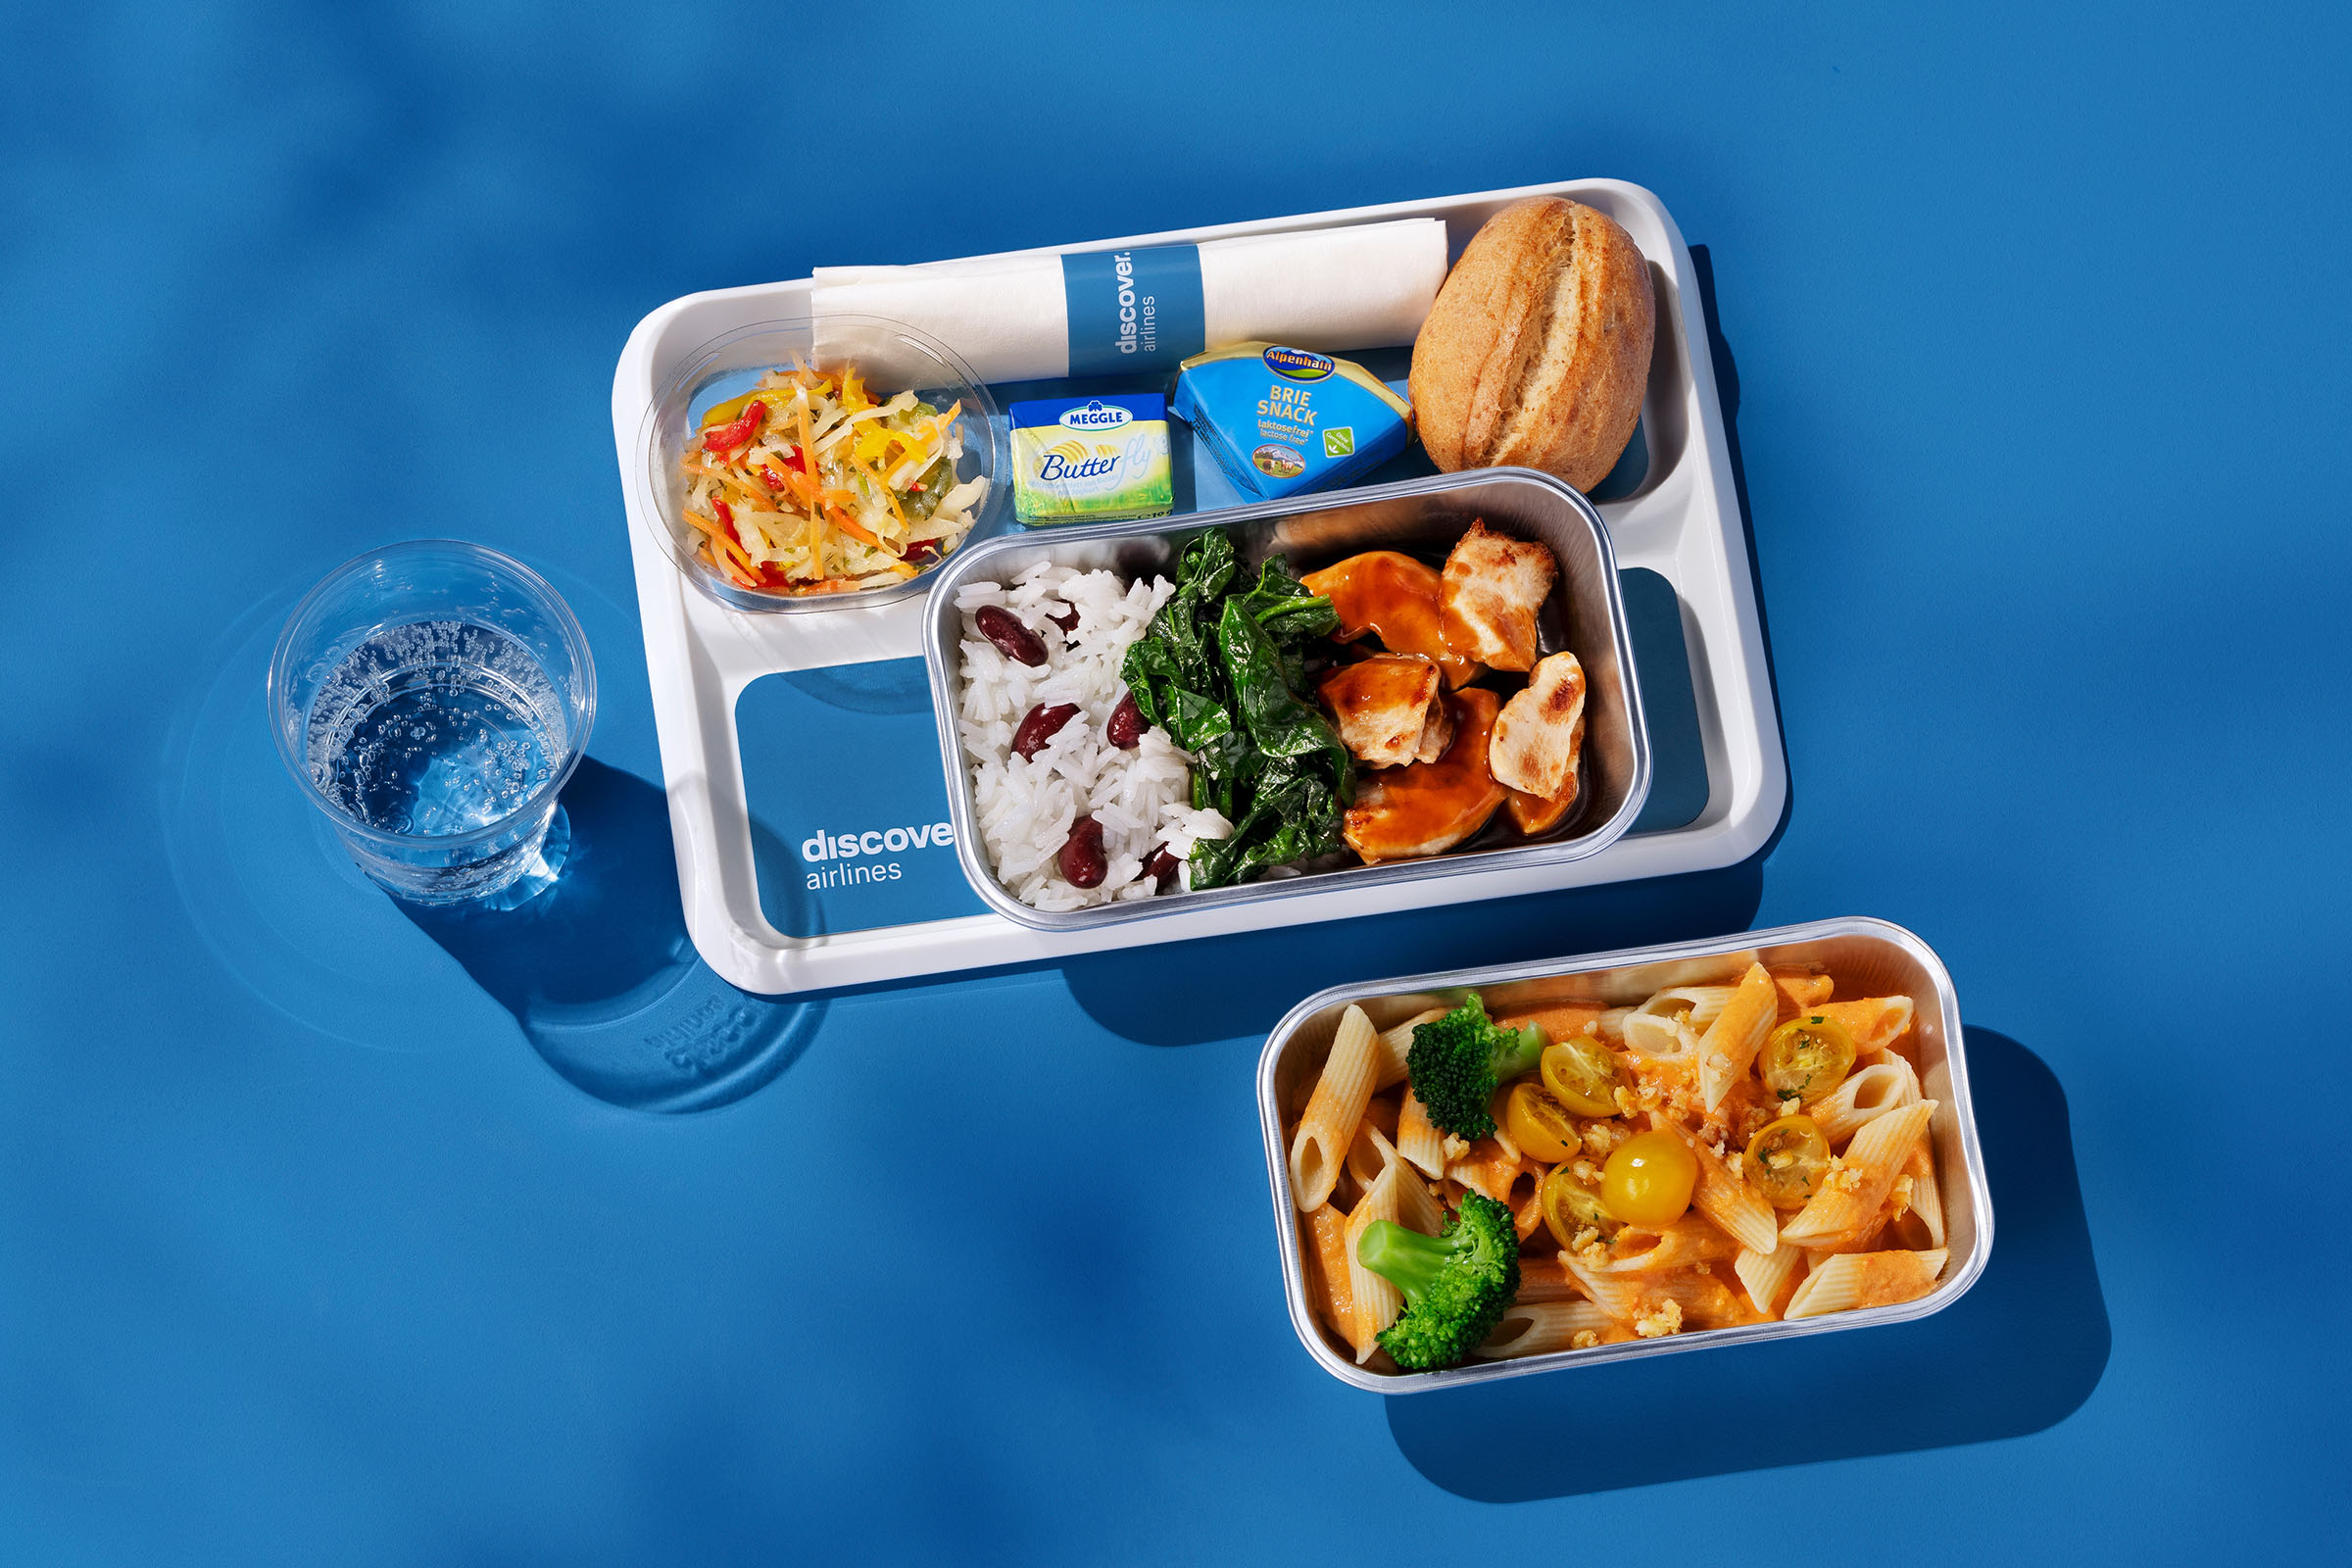 Economy Class meal on long-haul flights